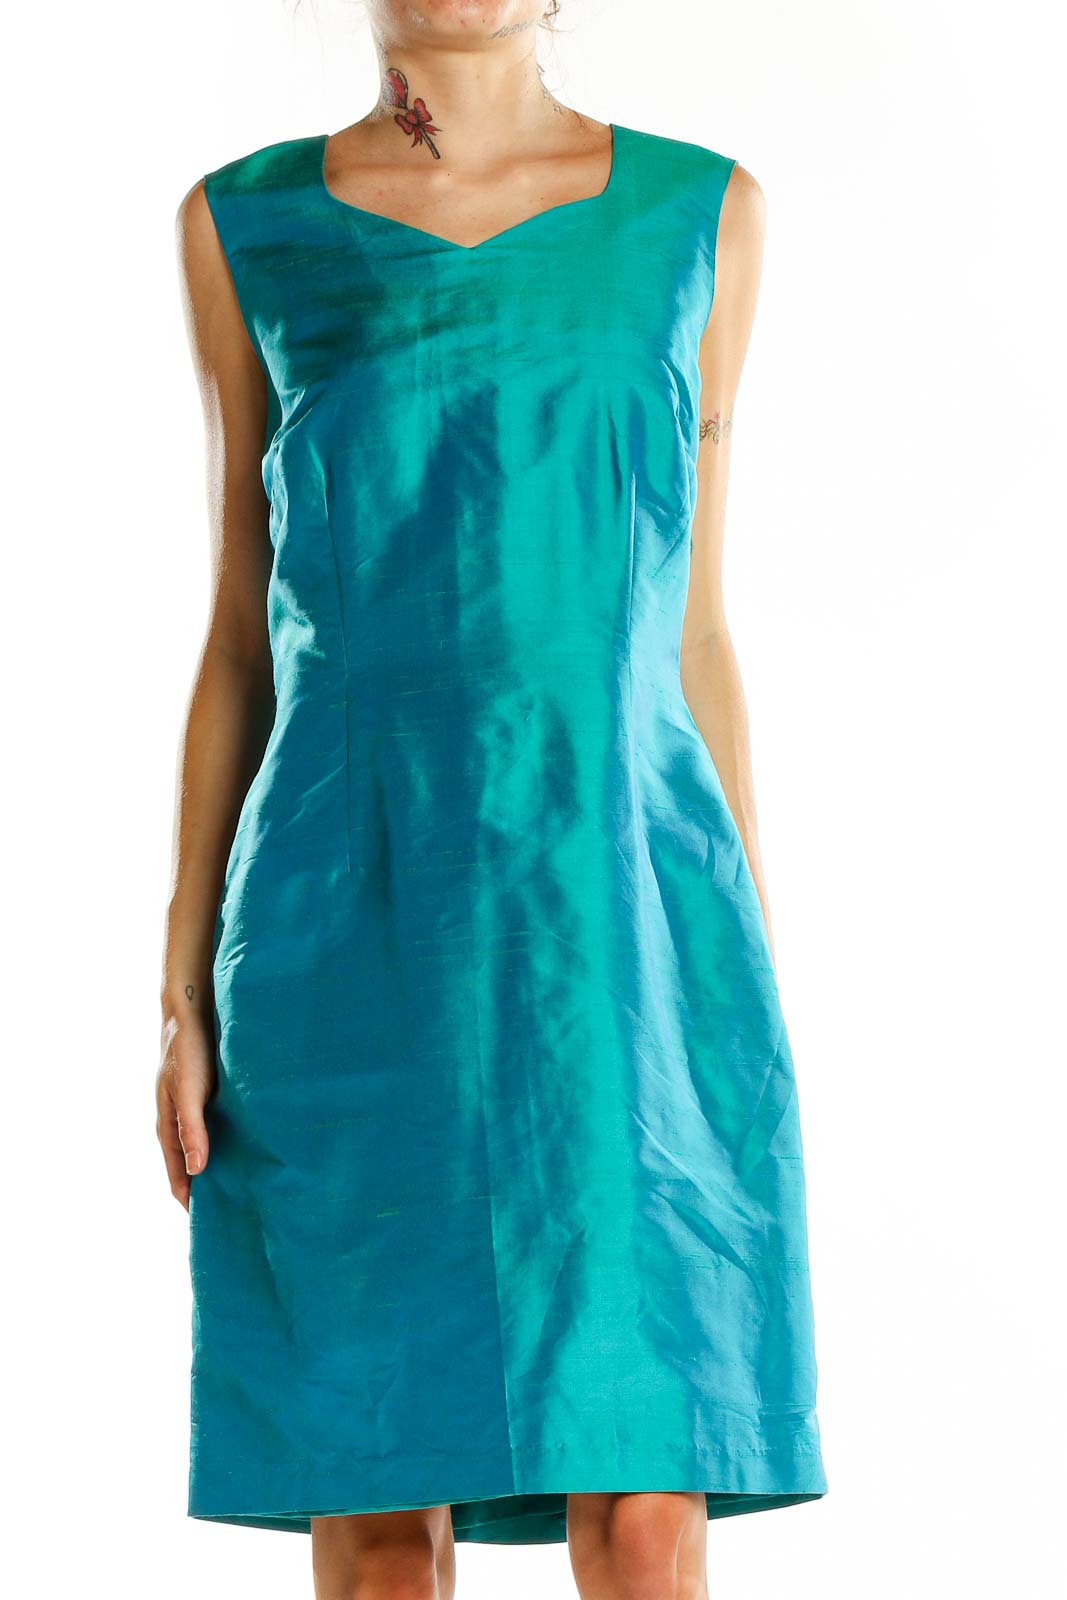 Worthington - Blue Green Retro Classic Dress Silk Polyester